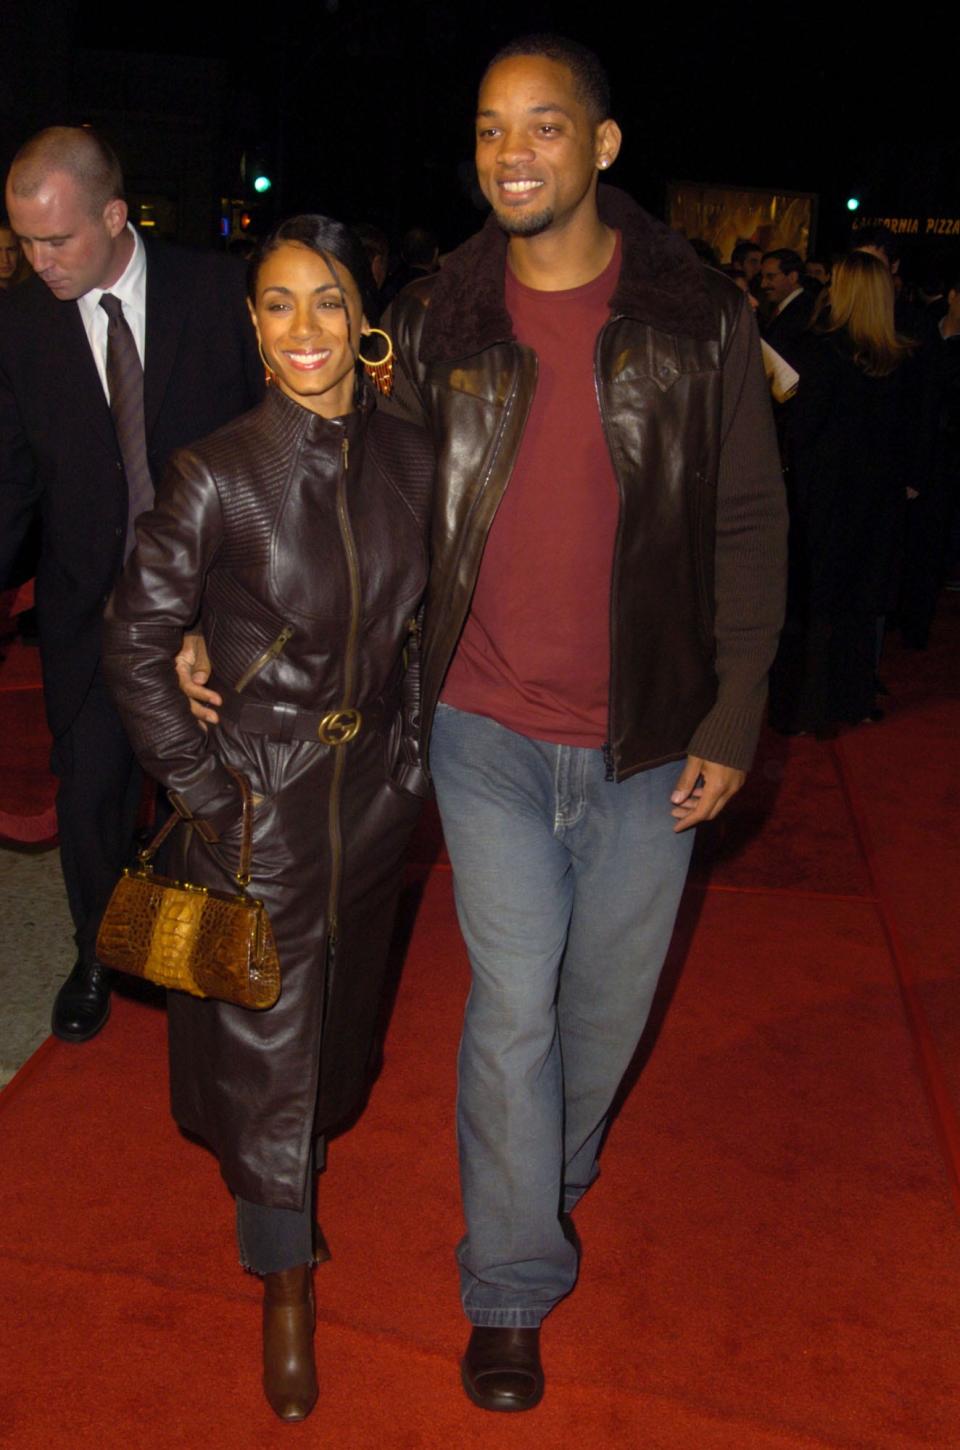 Jada Pinkett Smith and Will Smith at a movie premiere on November 30, 2003.